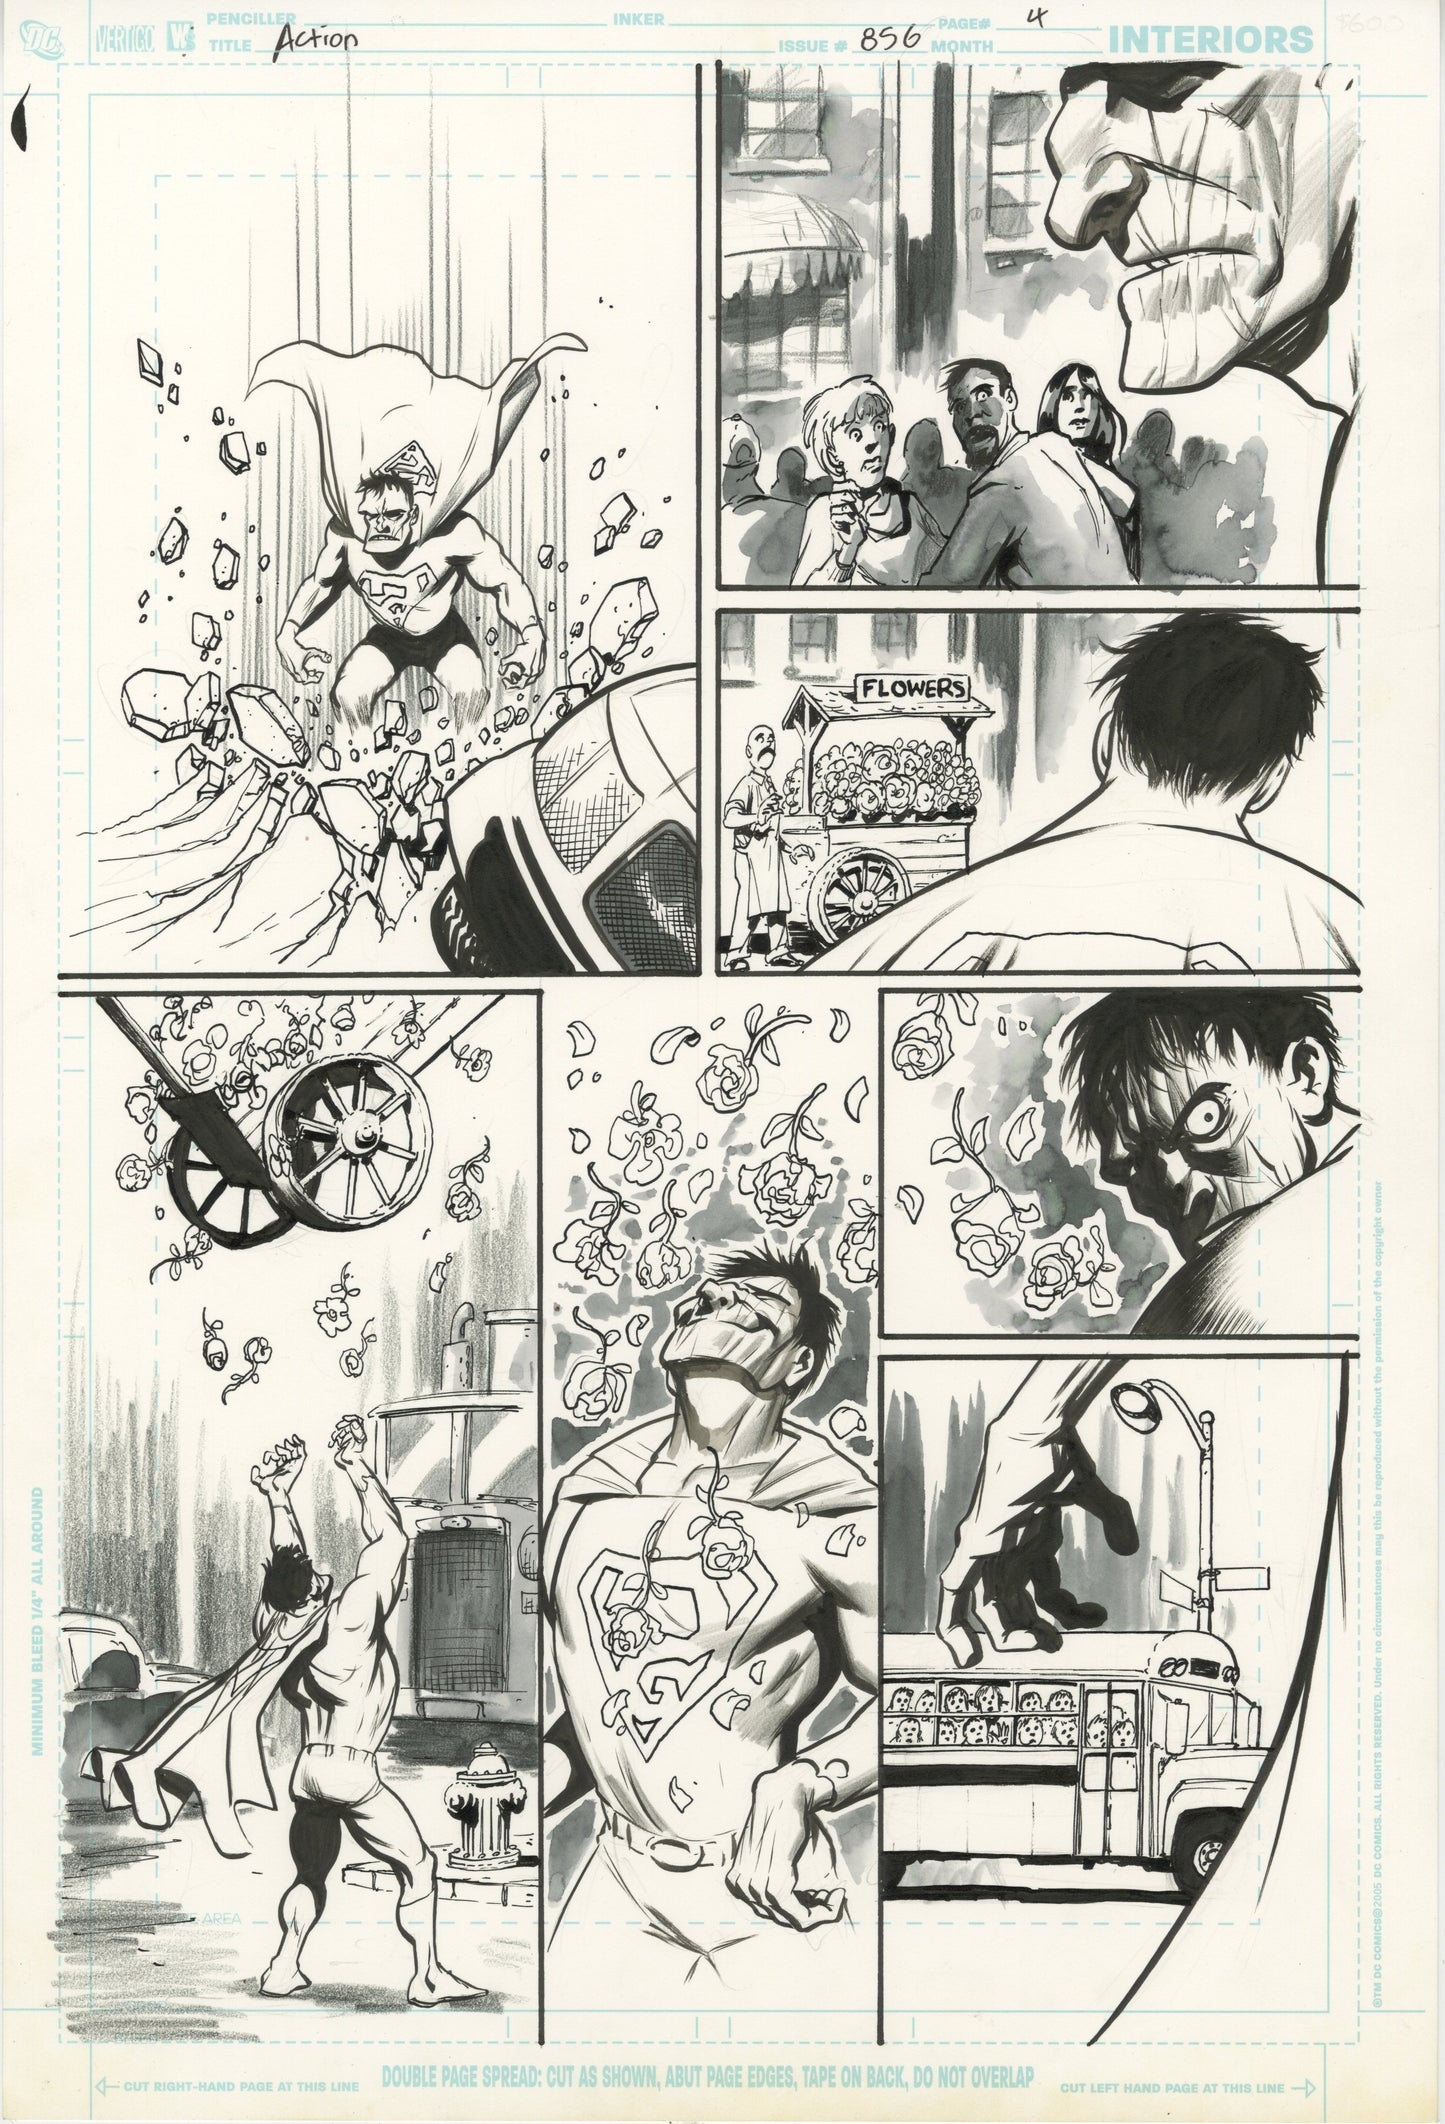 Action Comics #856, Page #04 (2007 DC, Superman: Escape From Bizarro World)